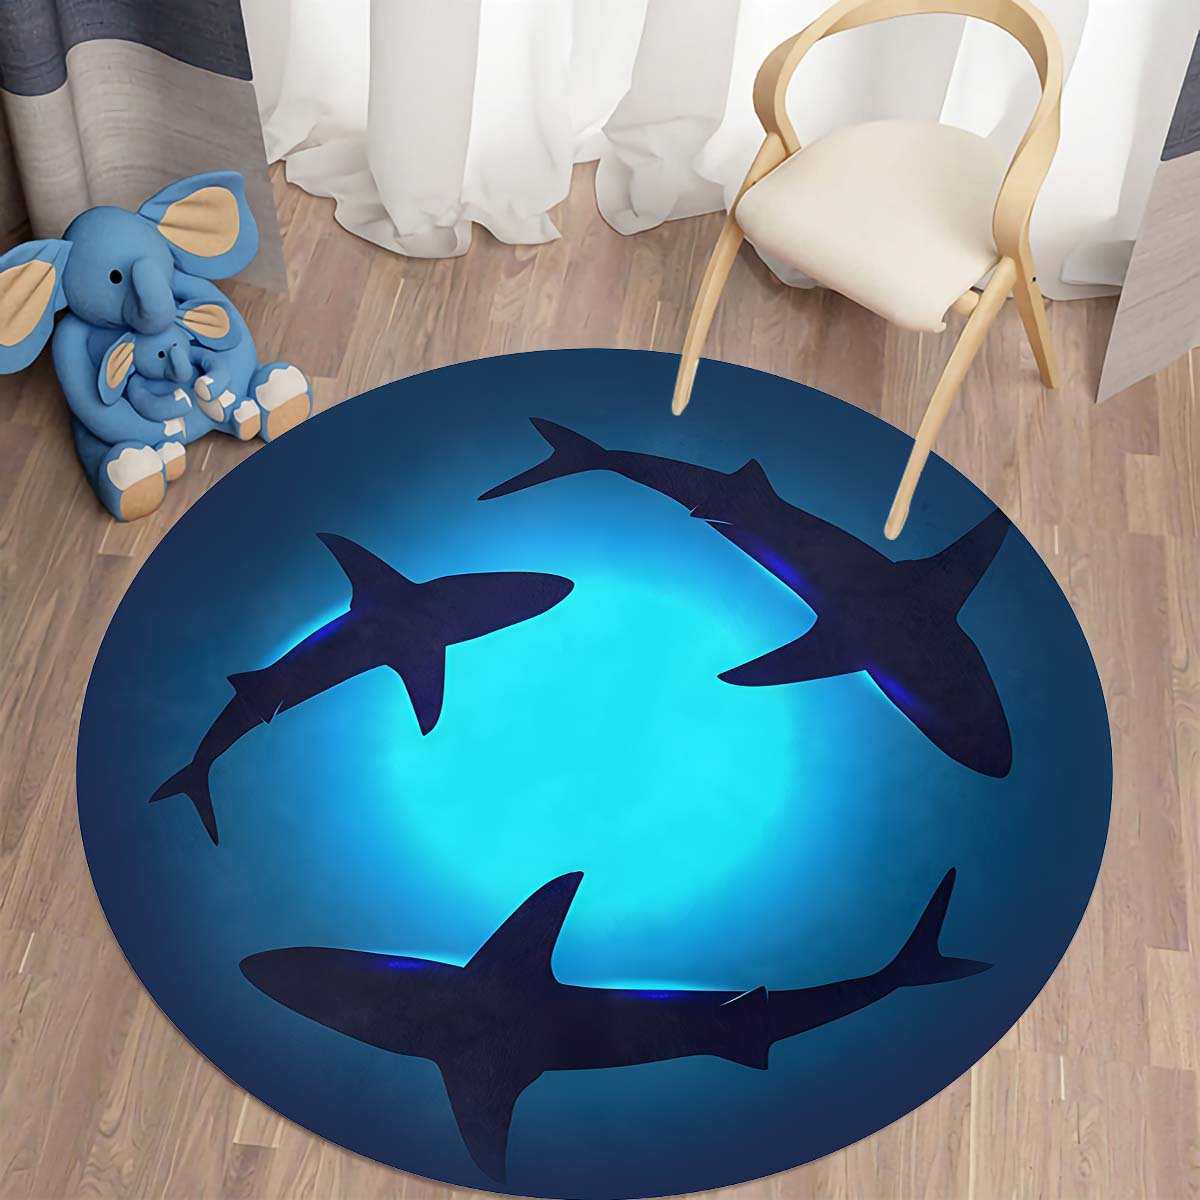 Baby Shark Rug, Baby Shark Sticker Printing Floor Mat Carpet, Cute